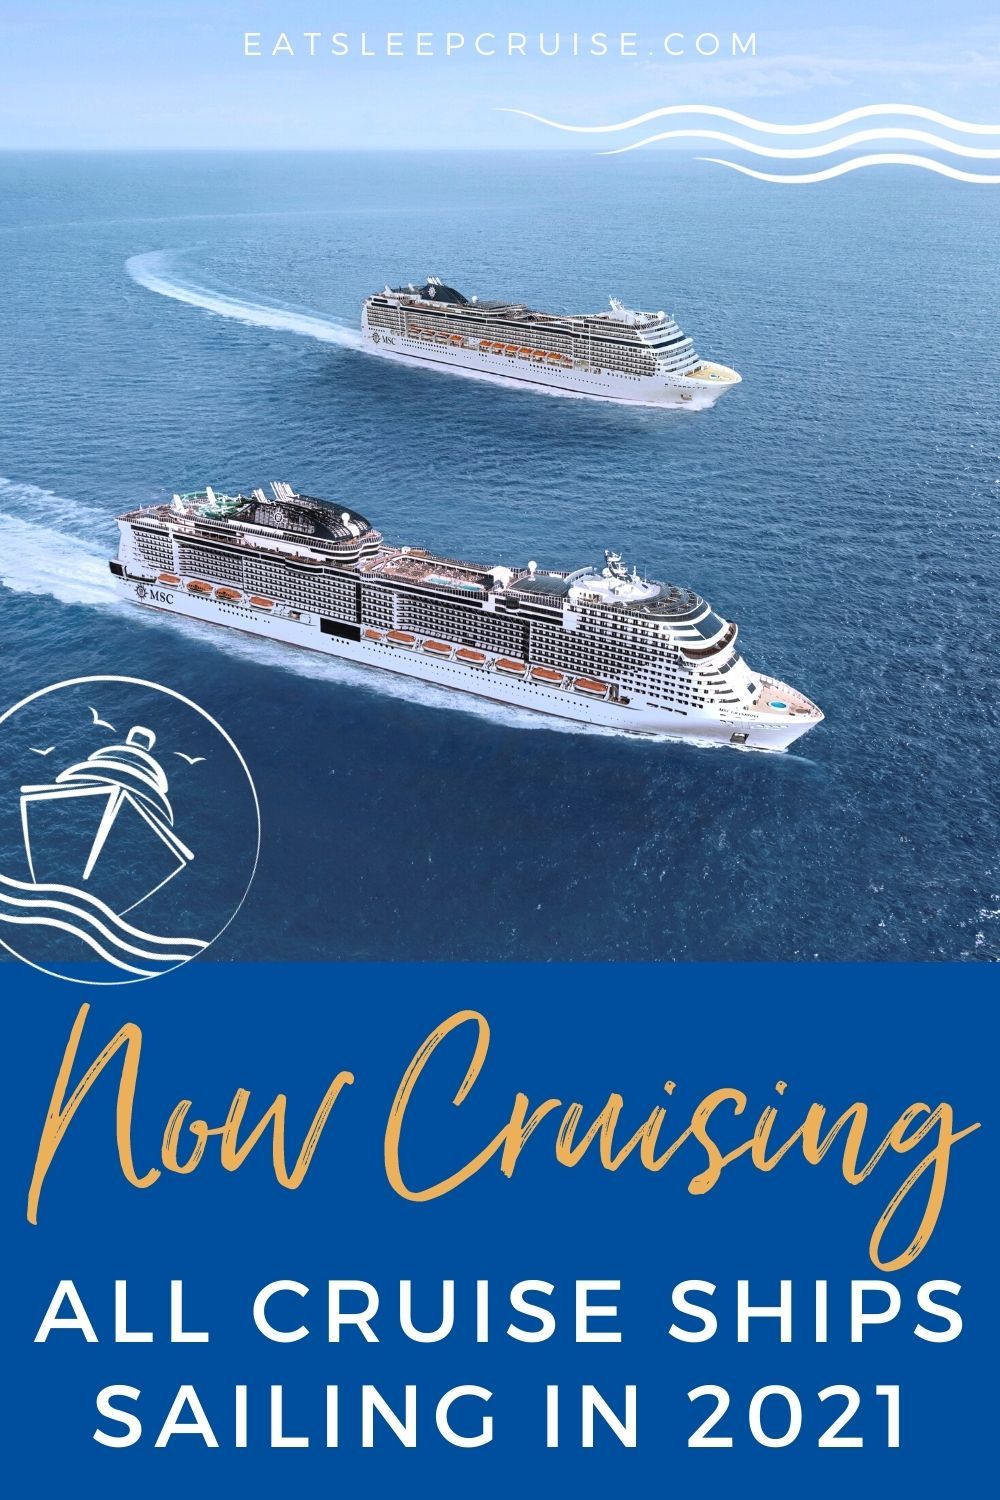 All Cruise Ships Cruising in 2021